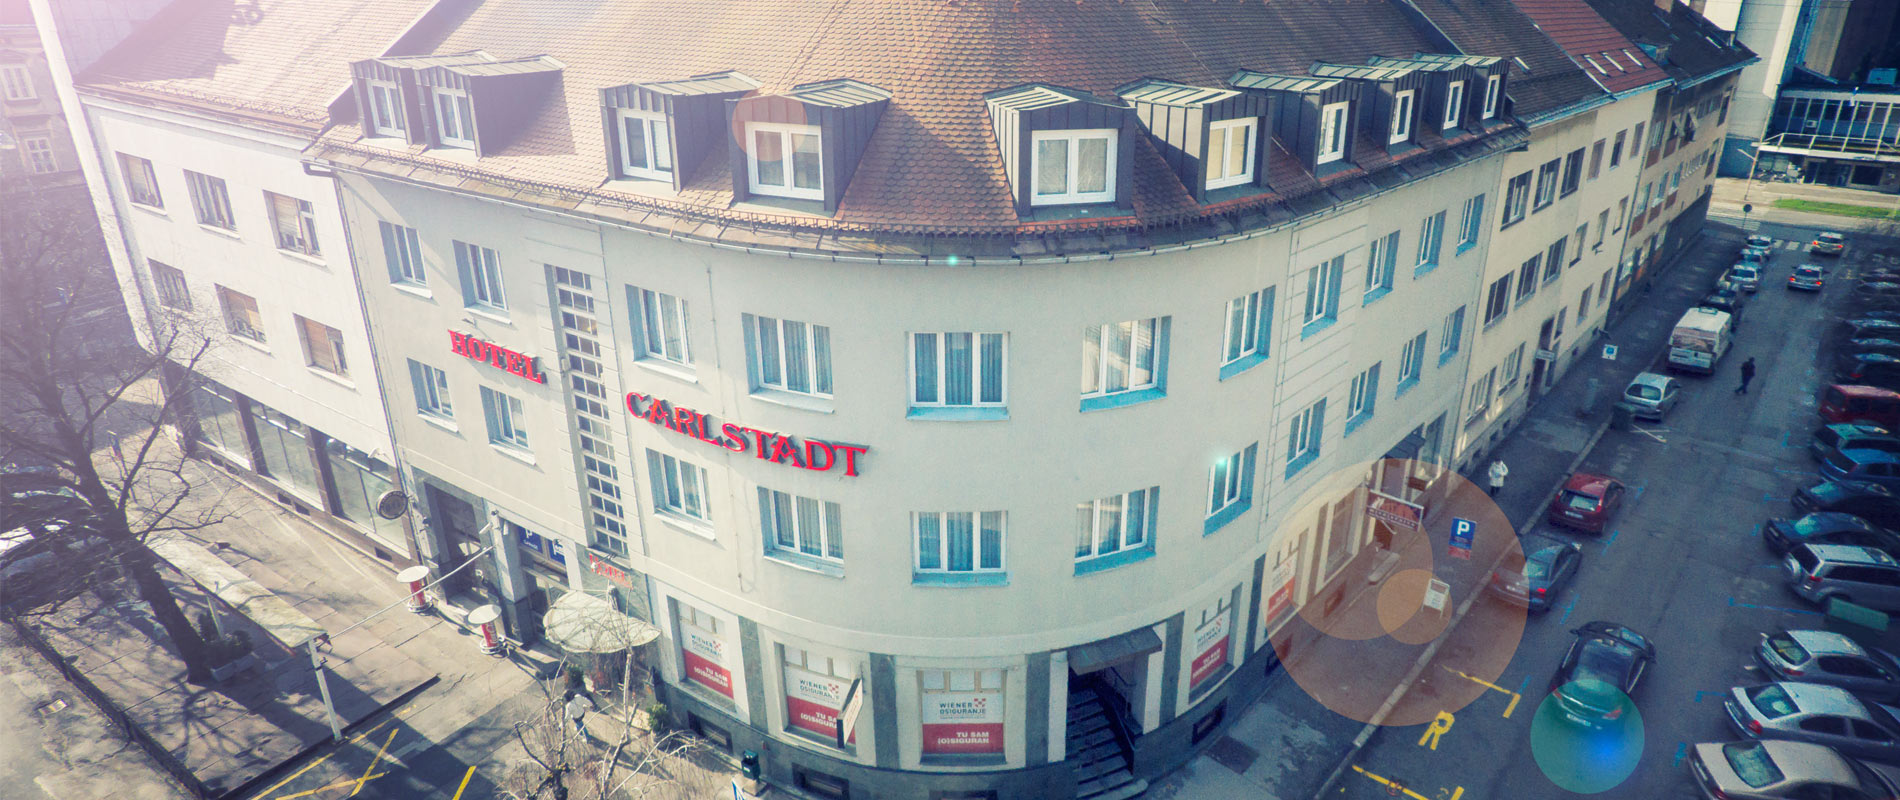 hotel-carlstadt-početna